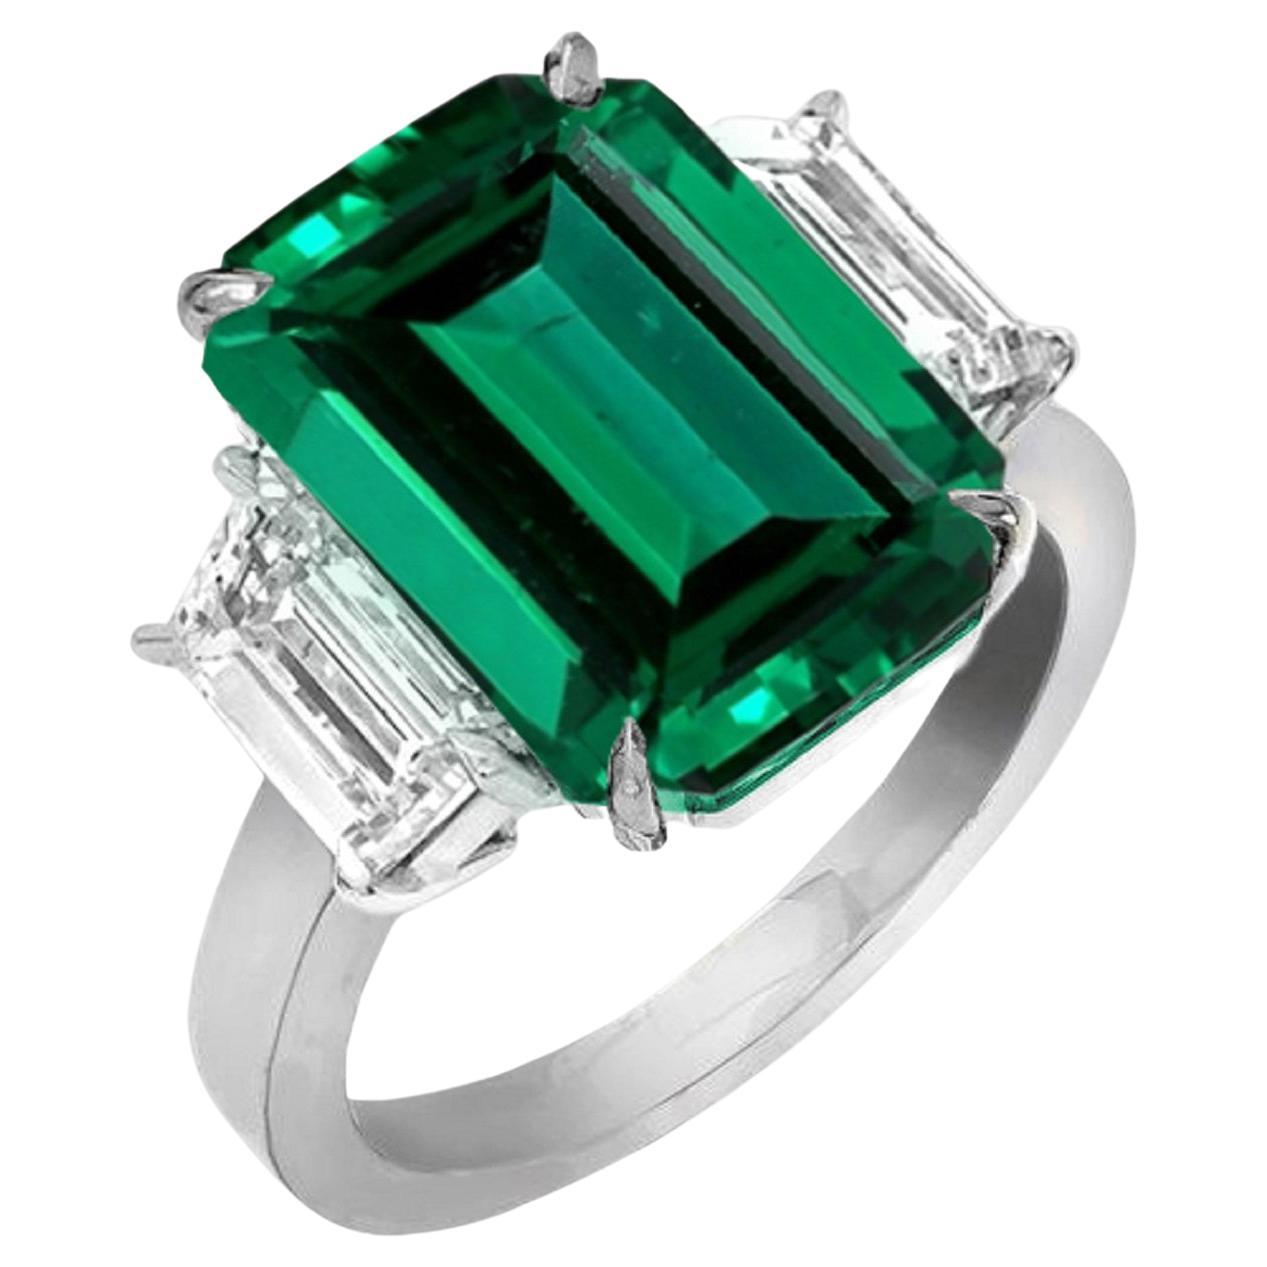 Platinring, handgefertigt in Italien, GIA-zertifizierter 4 Karat grüner Smaragd, Diamant